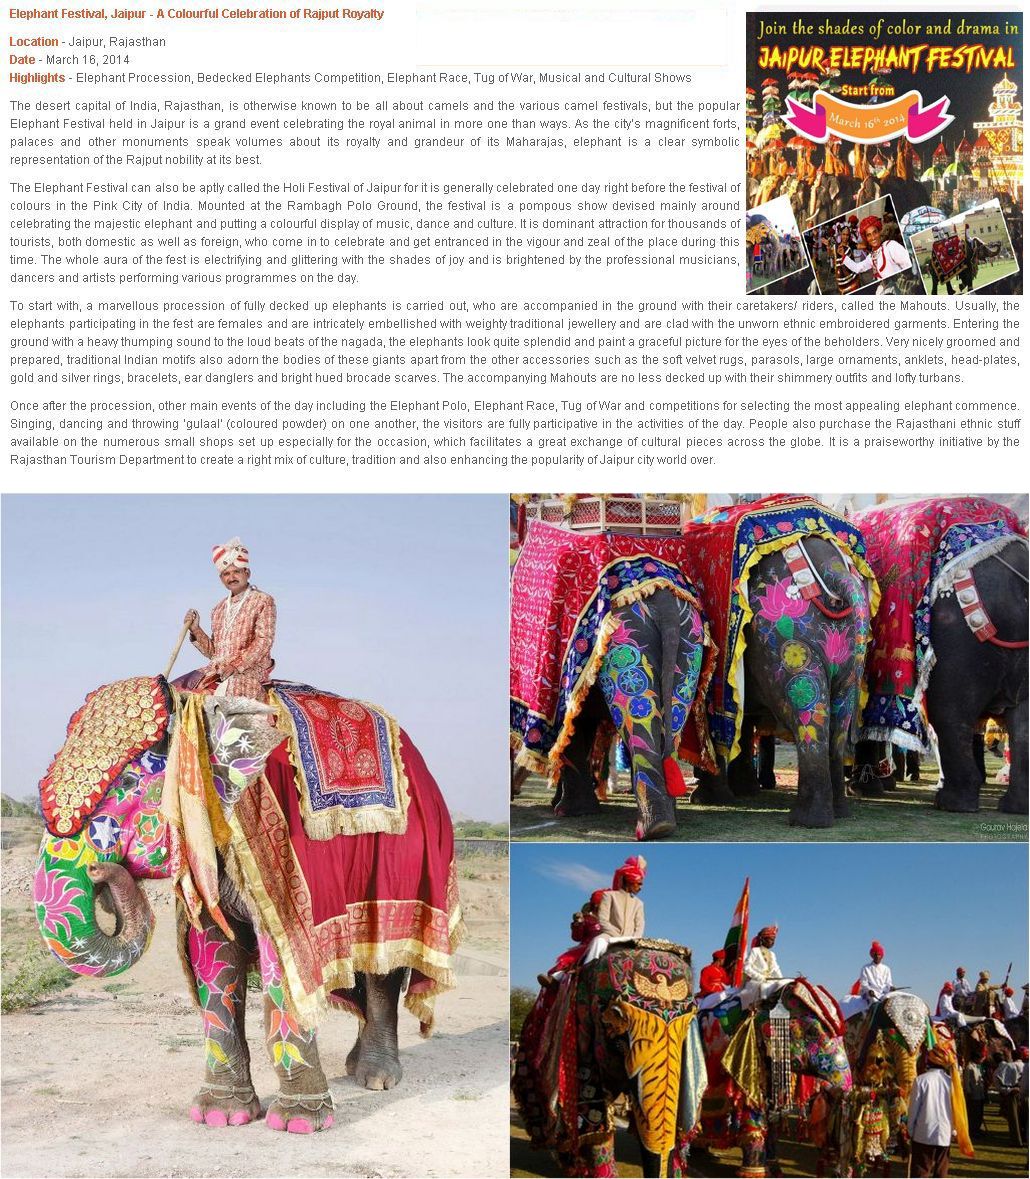 jaipur elephant festival 2014